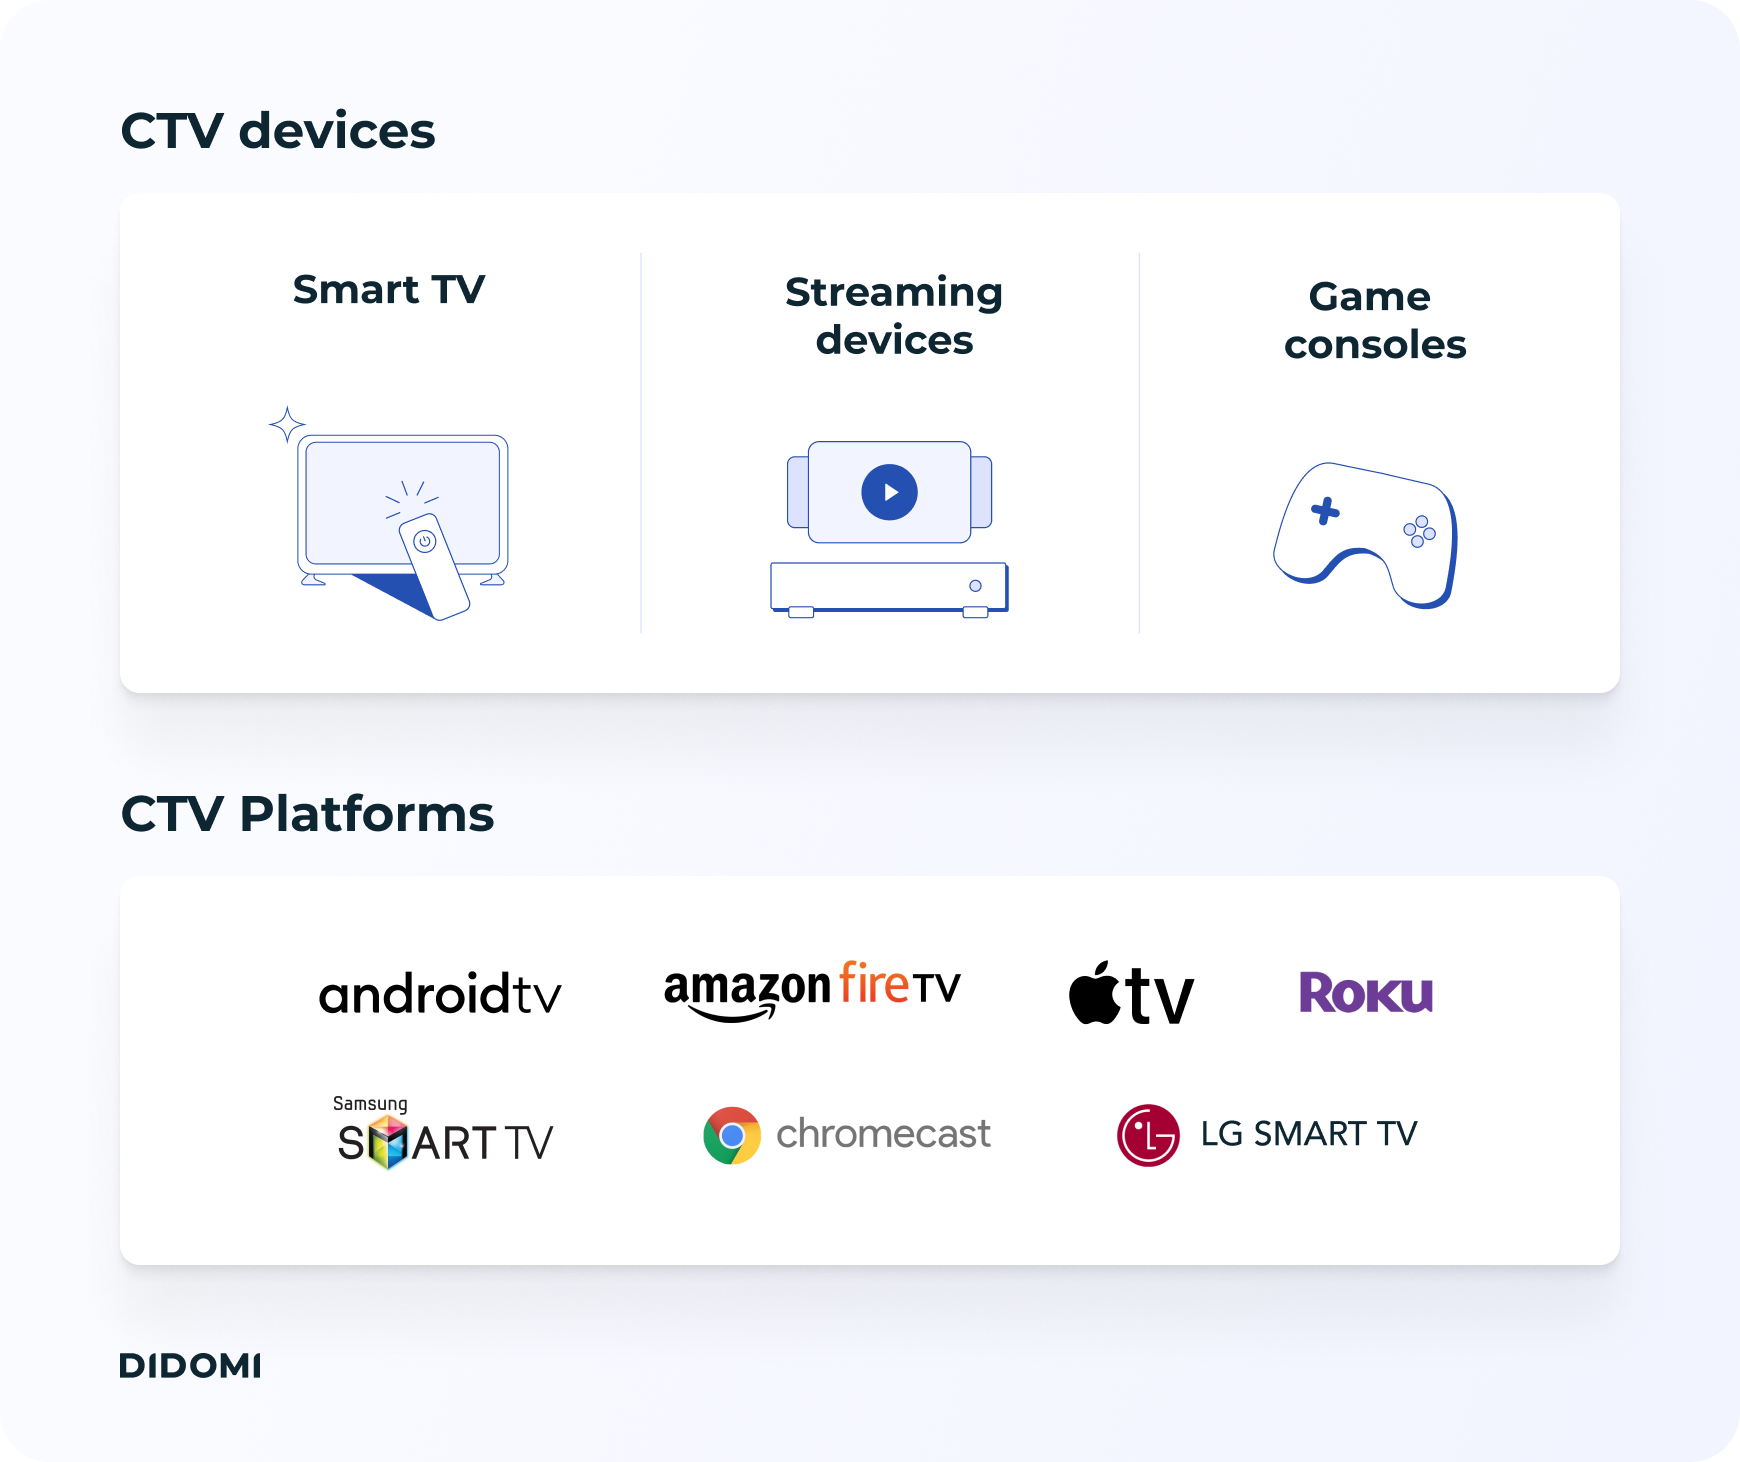 Didomi - CTV Devices & platforms